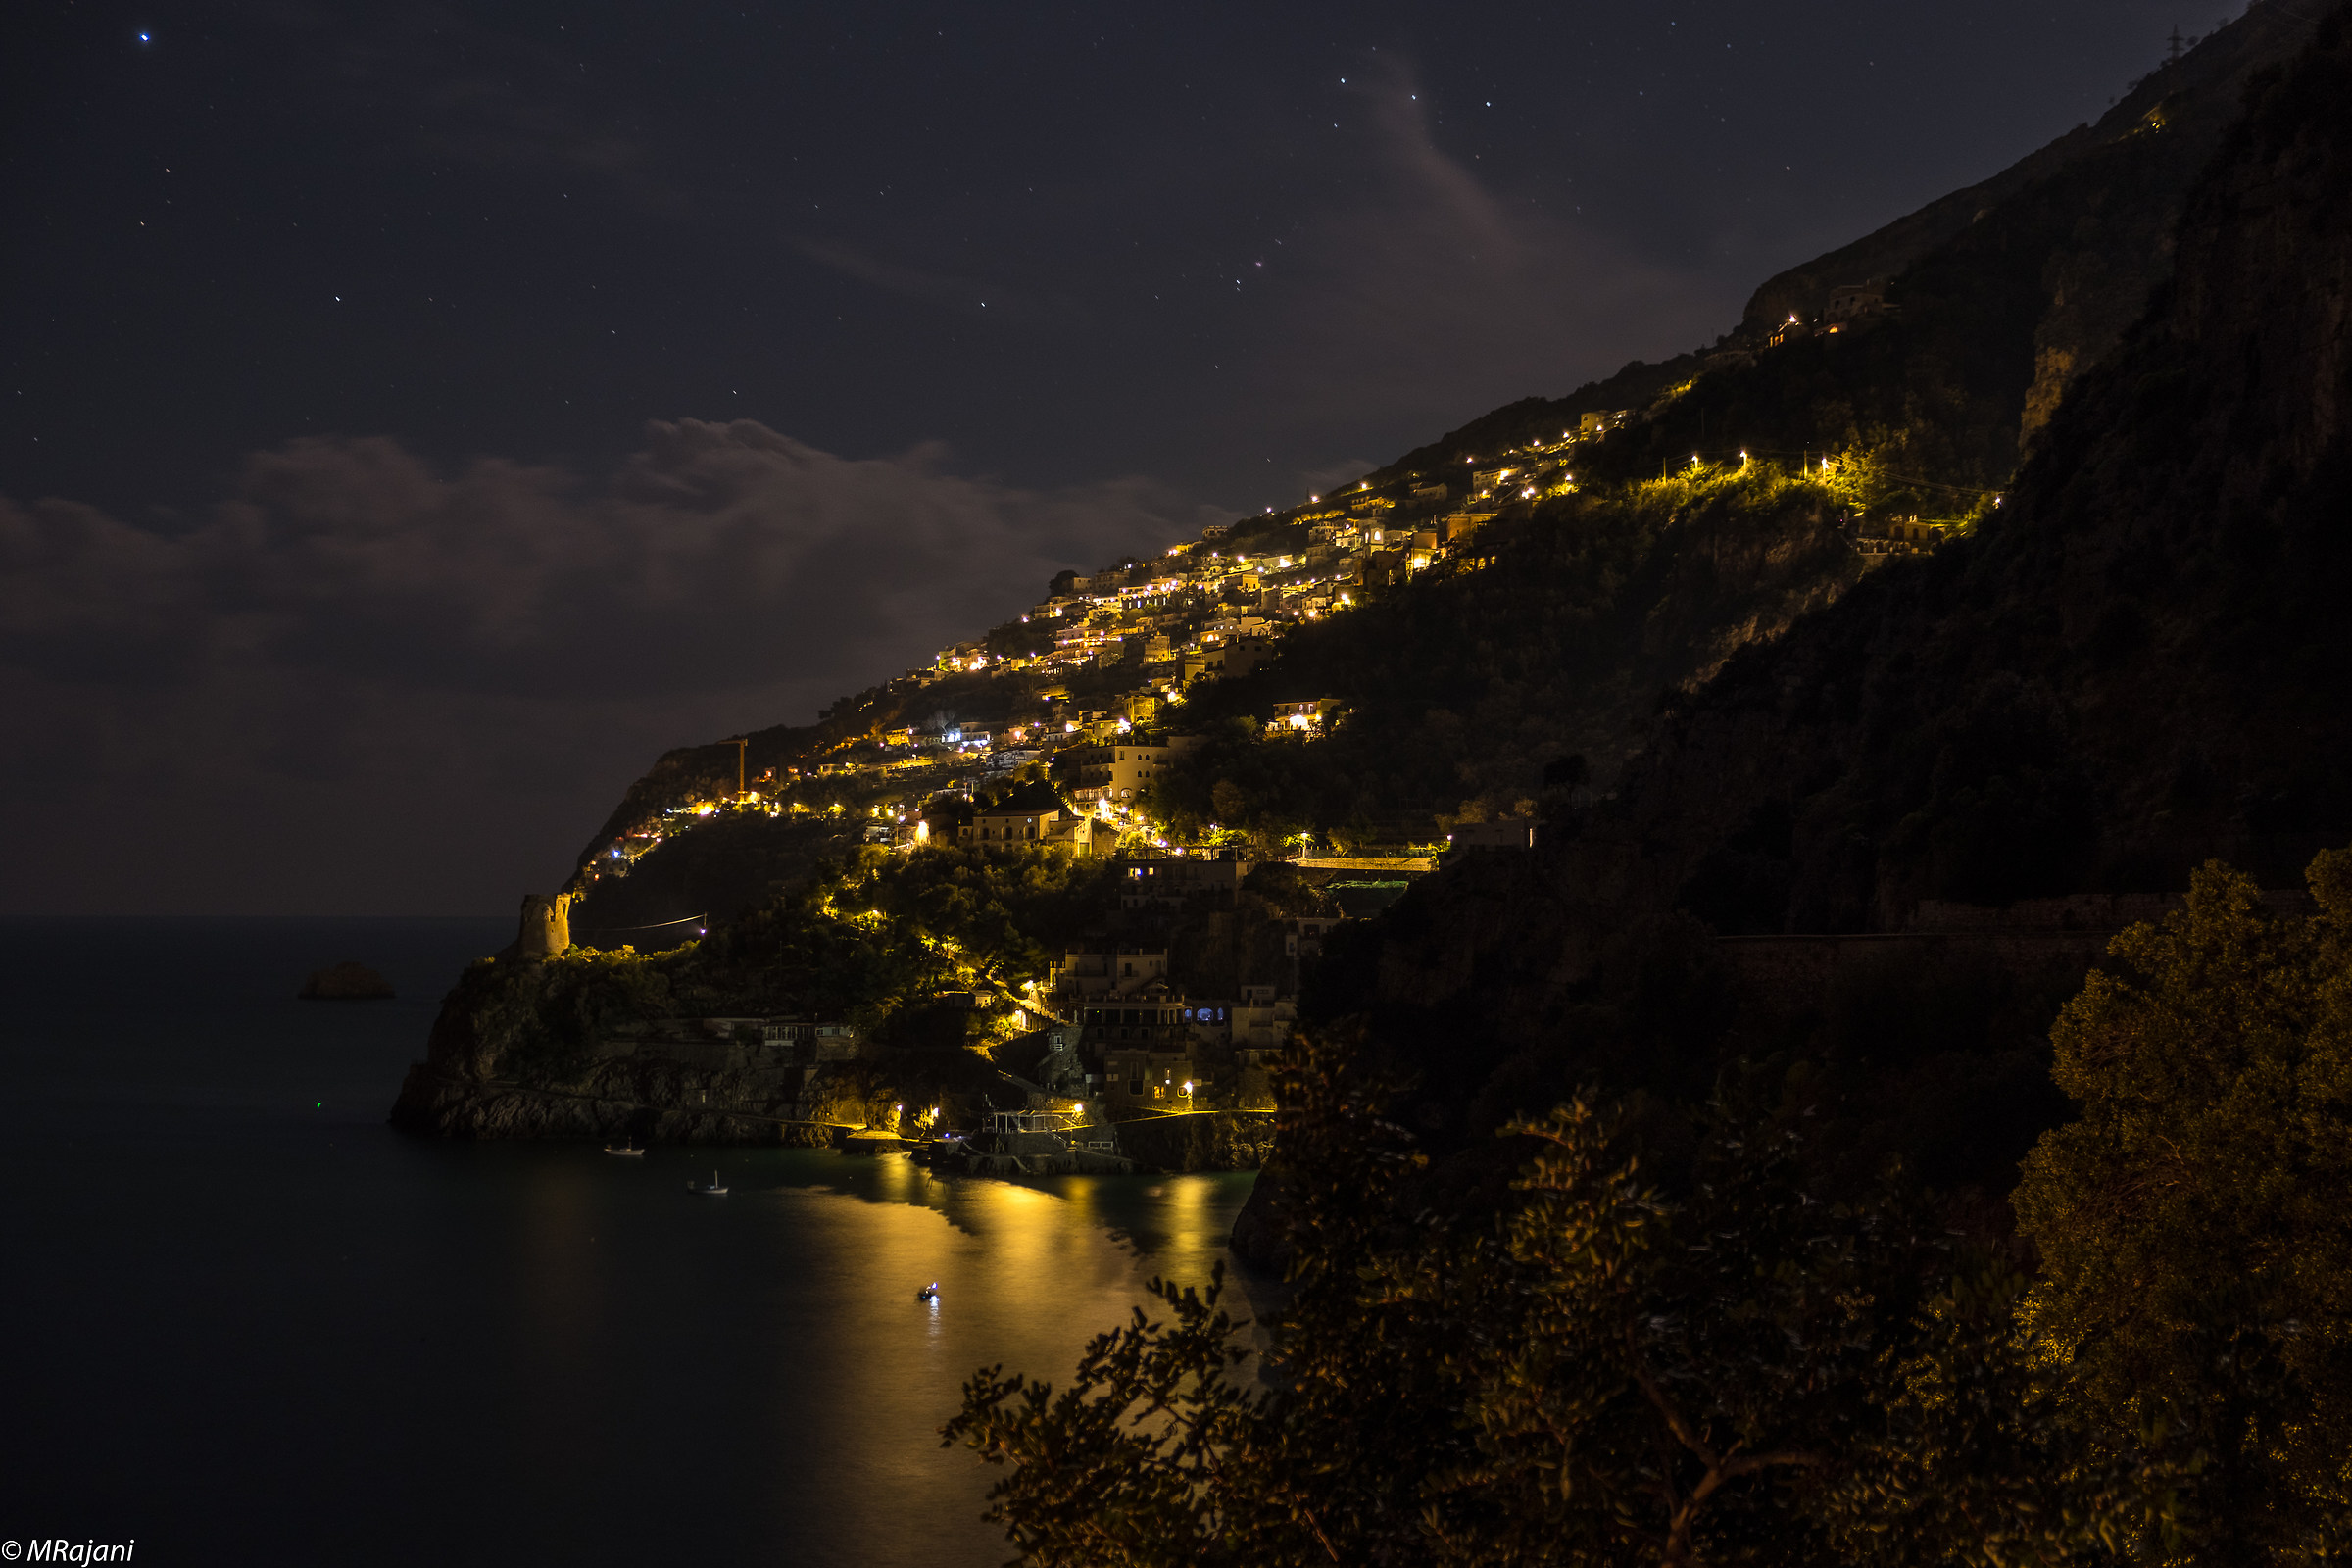 Praiano's view at night...